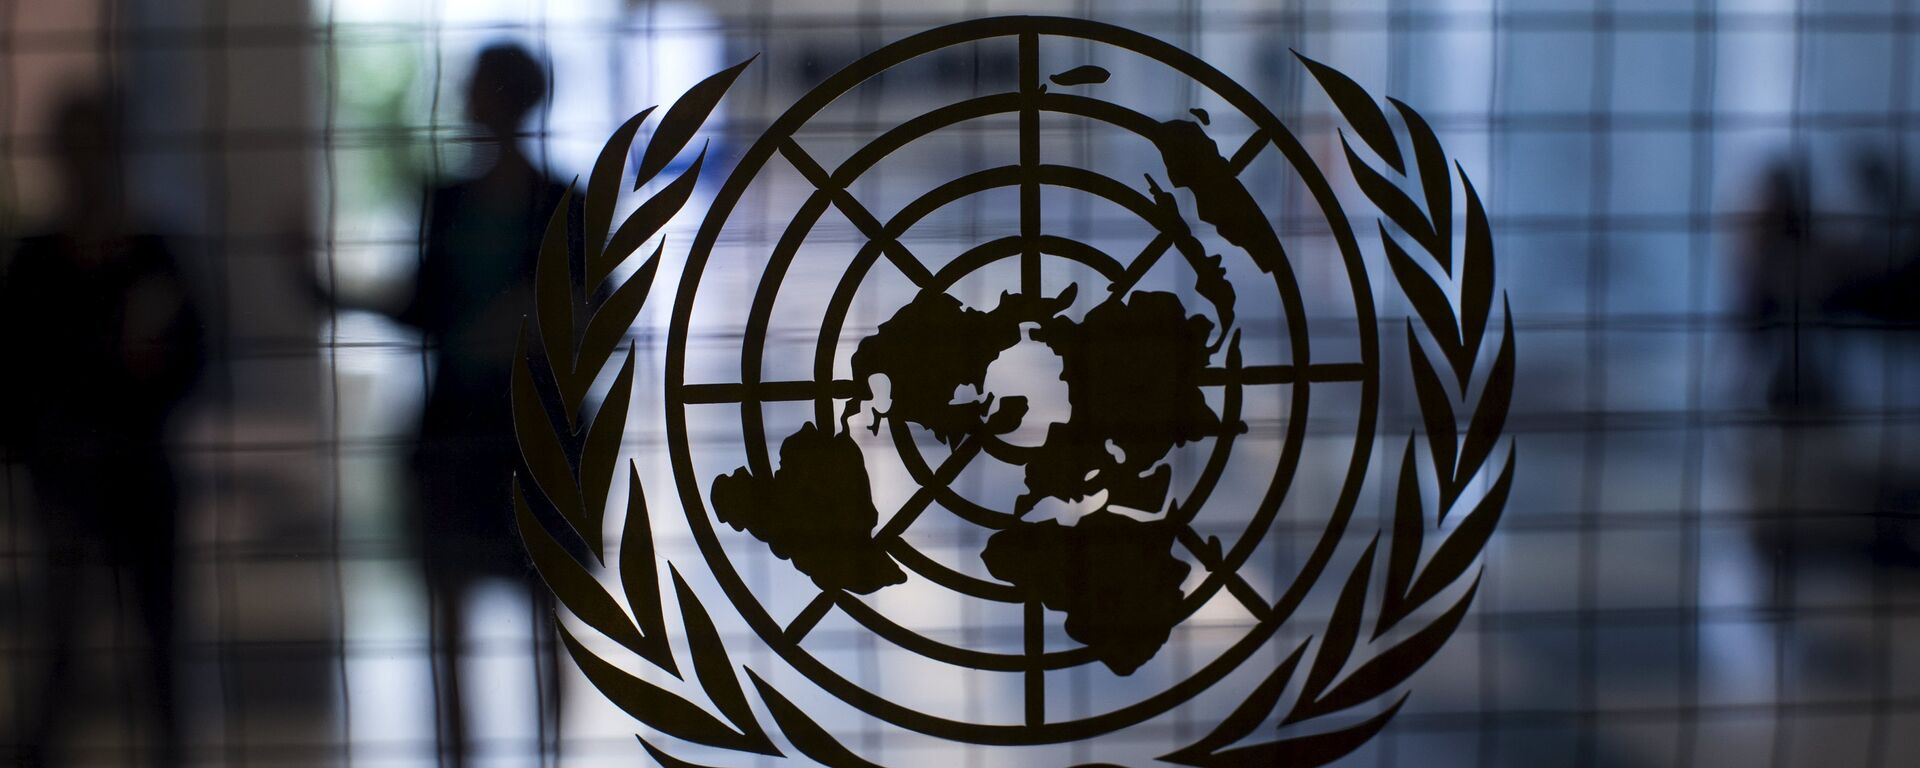 Logo de la ONU - Sputnik Mundo, 1920, 16.08.2021